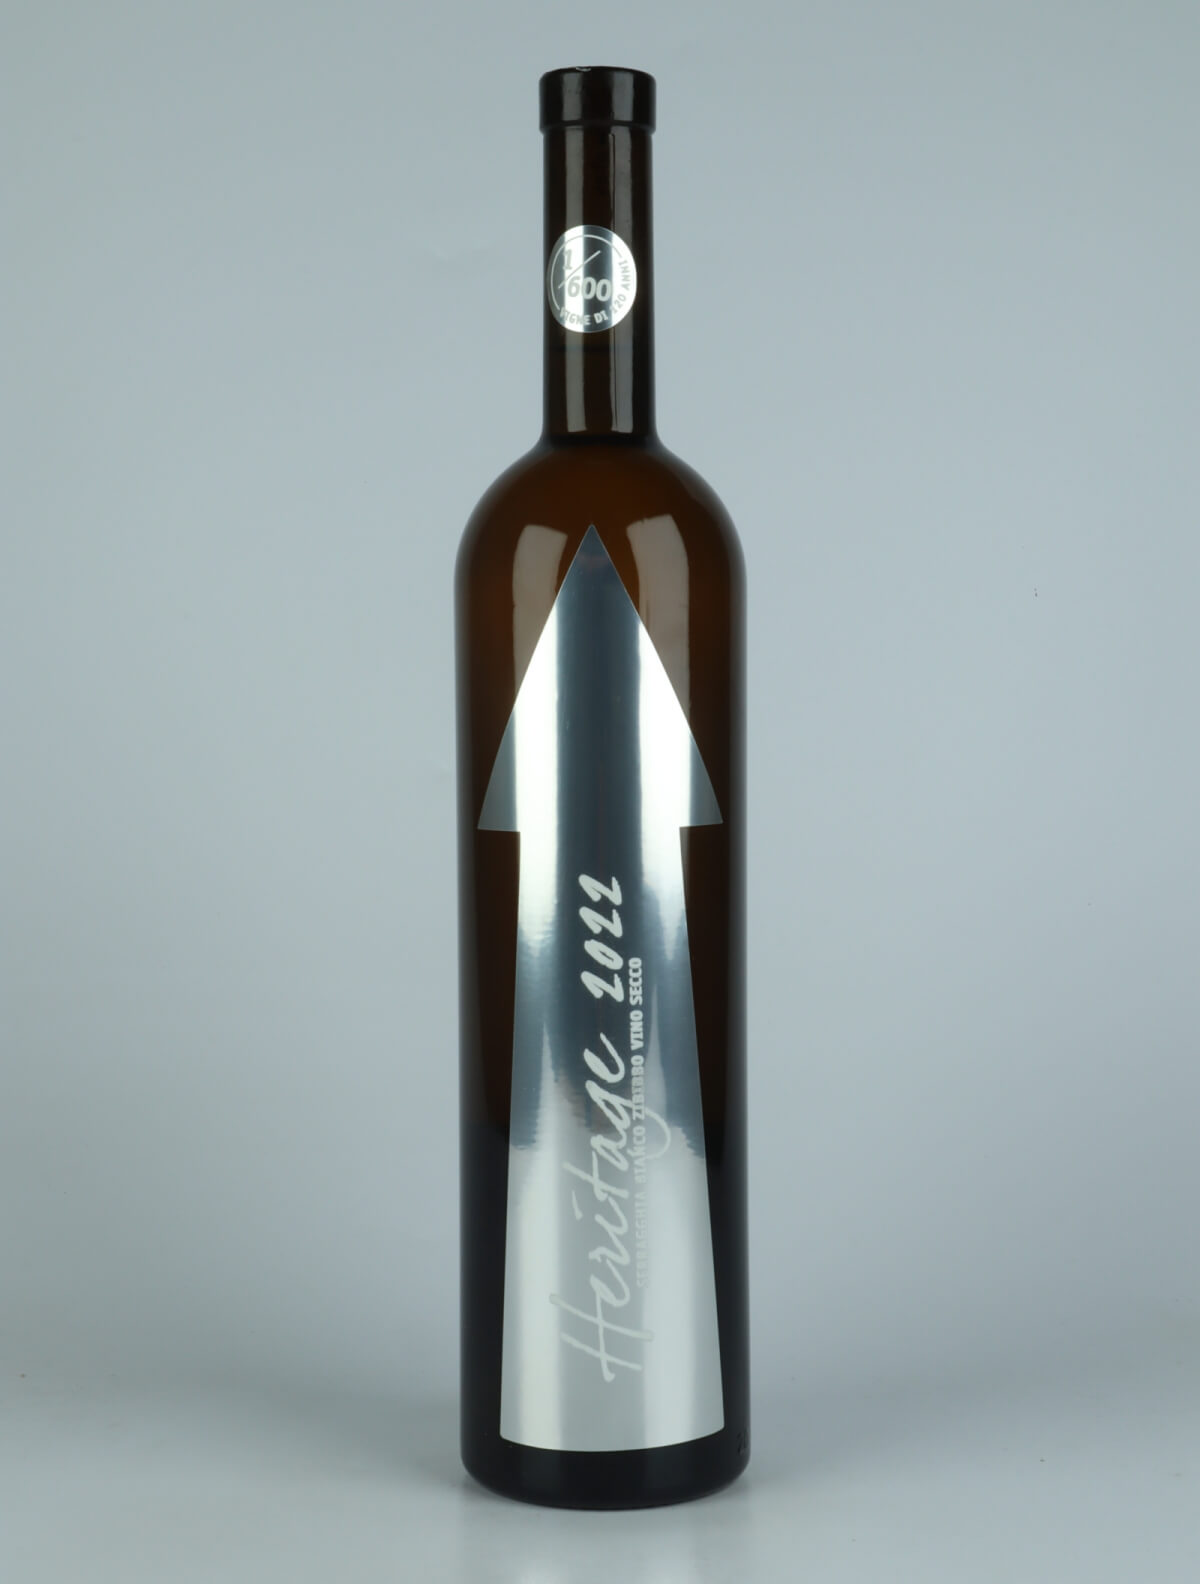 A bottle 2022 Heritage Orange wine from Gabrio Bini, Sicily in Italy